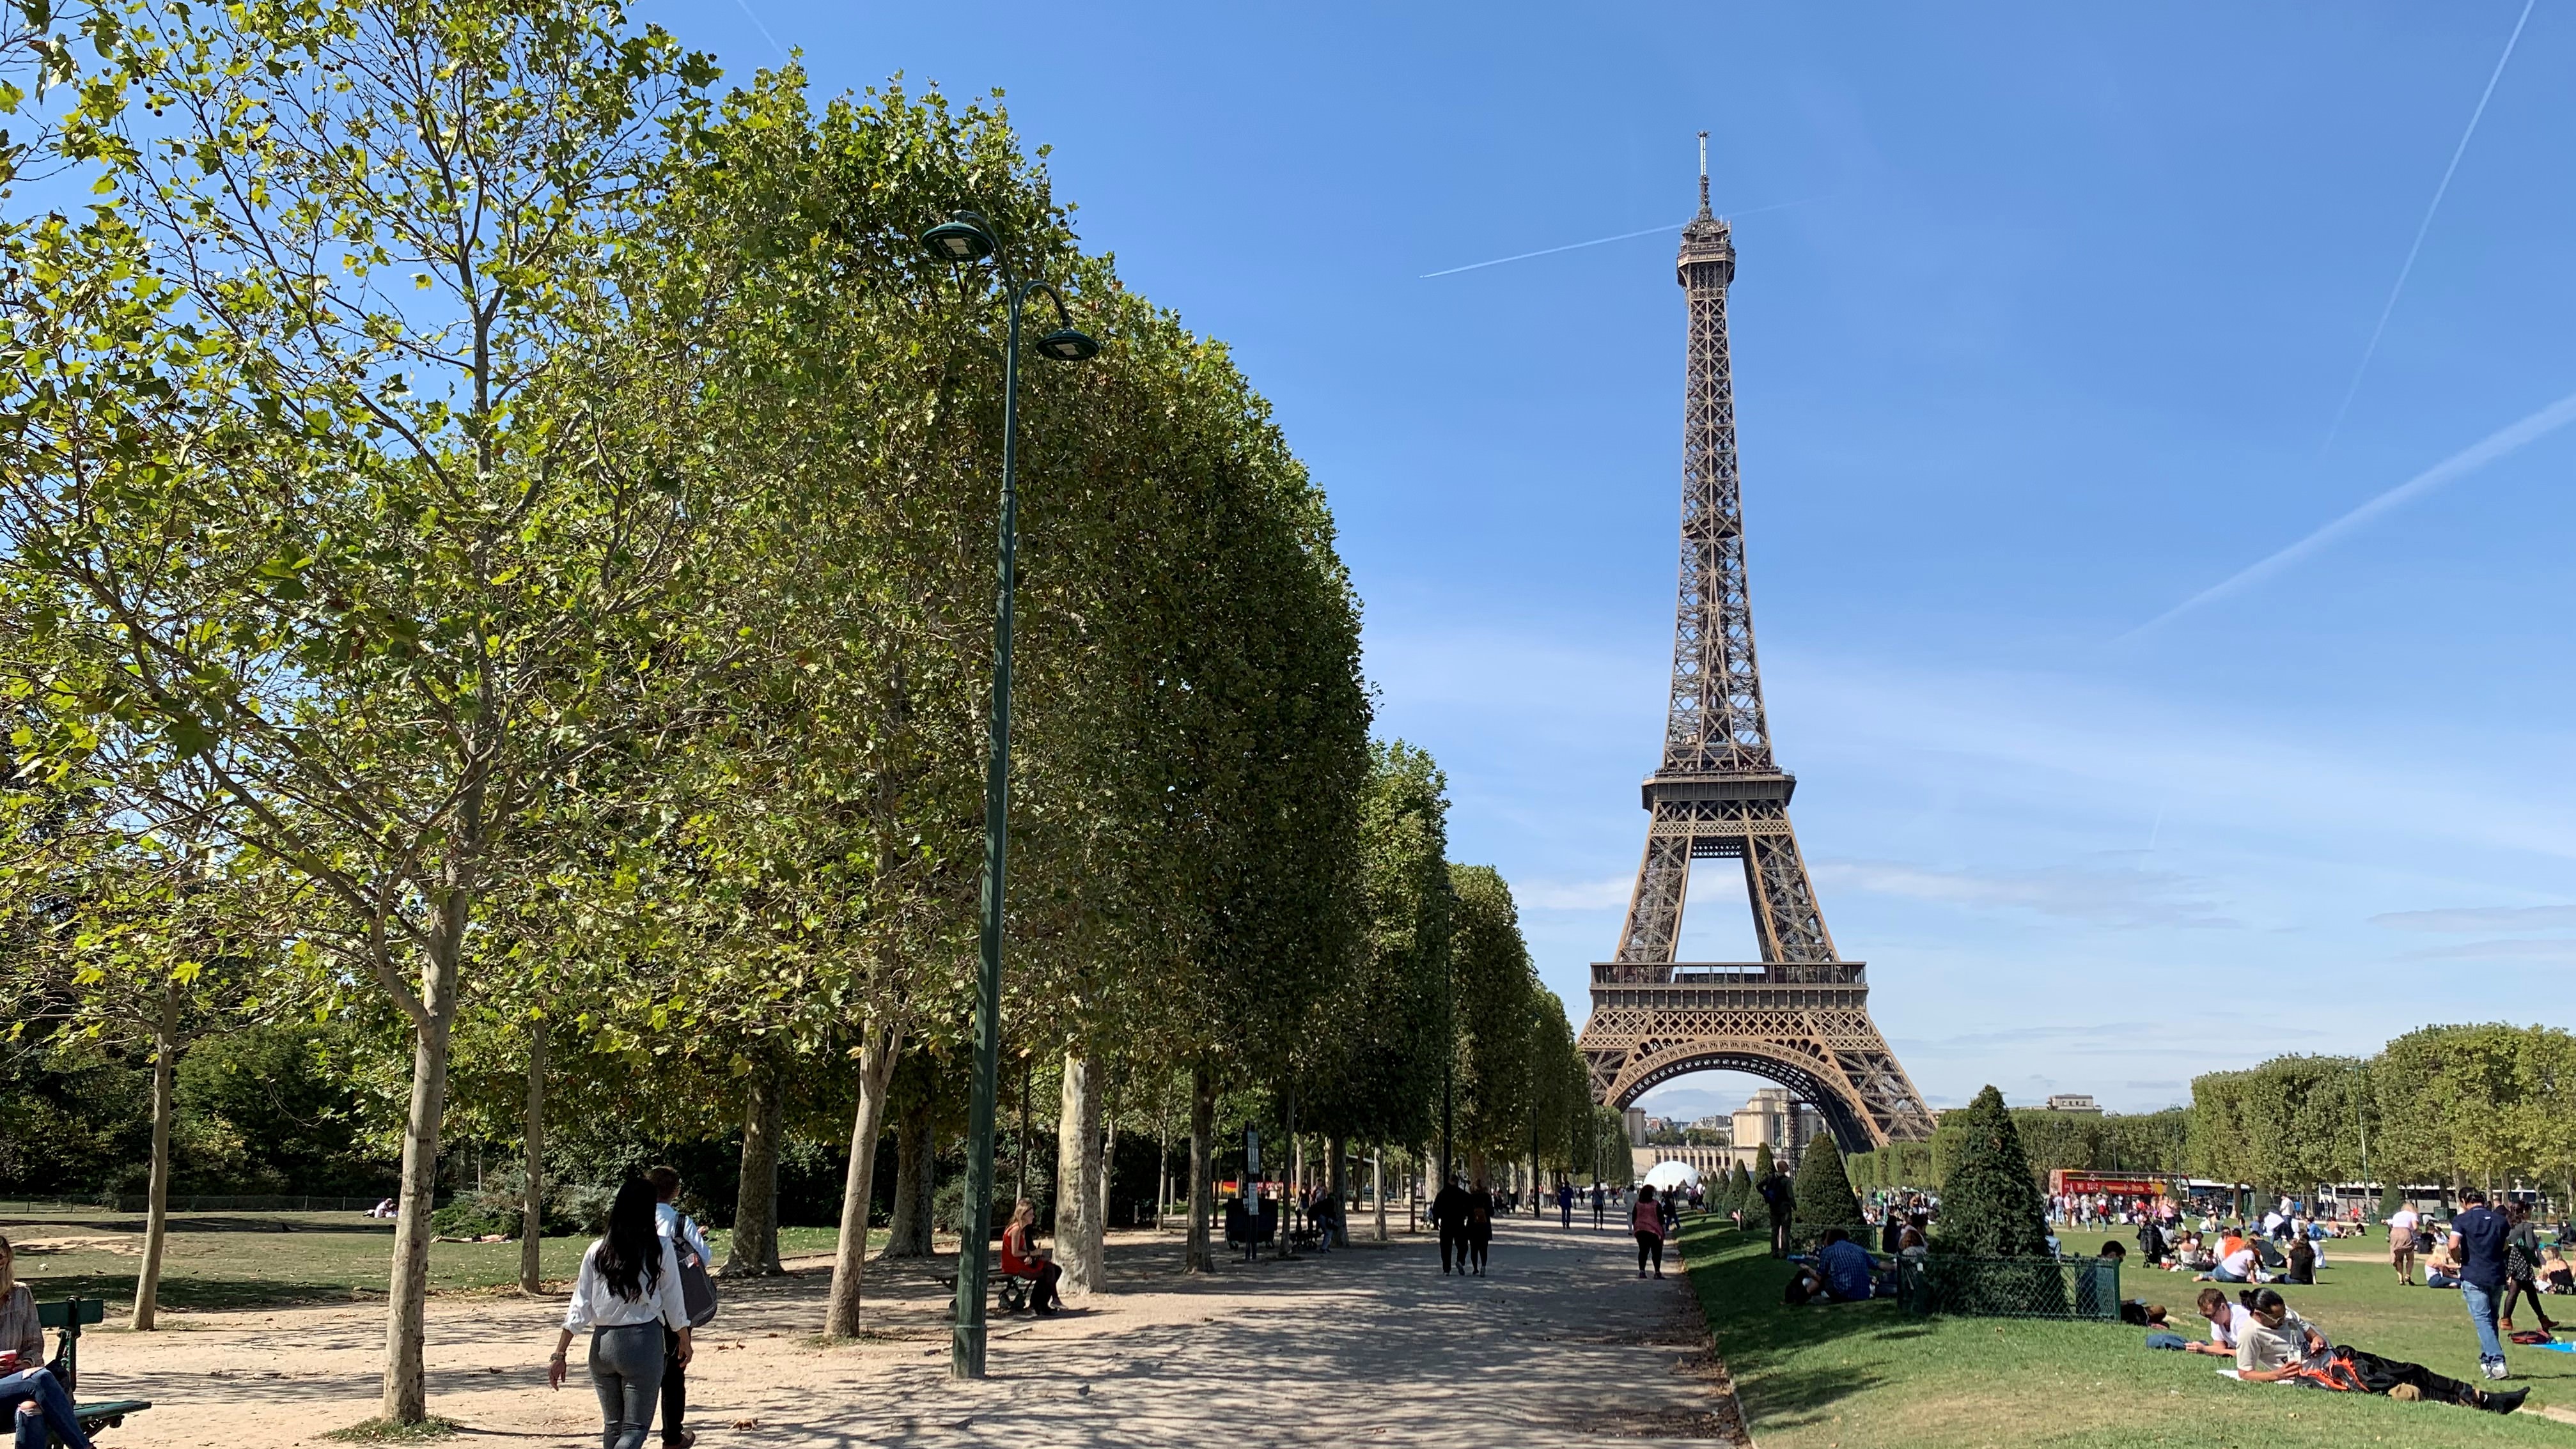 Eiffel Tower, Paris - Senior Trip to Paris